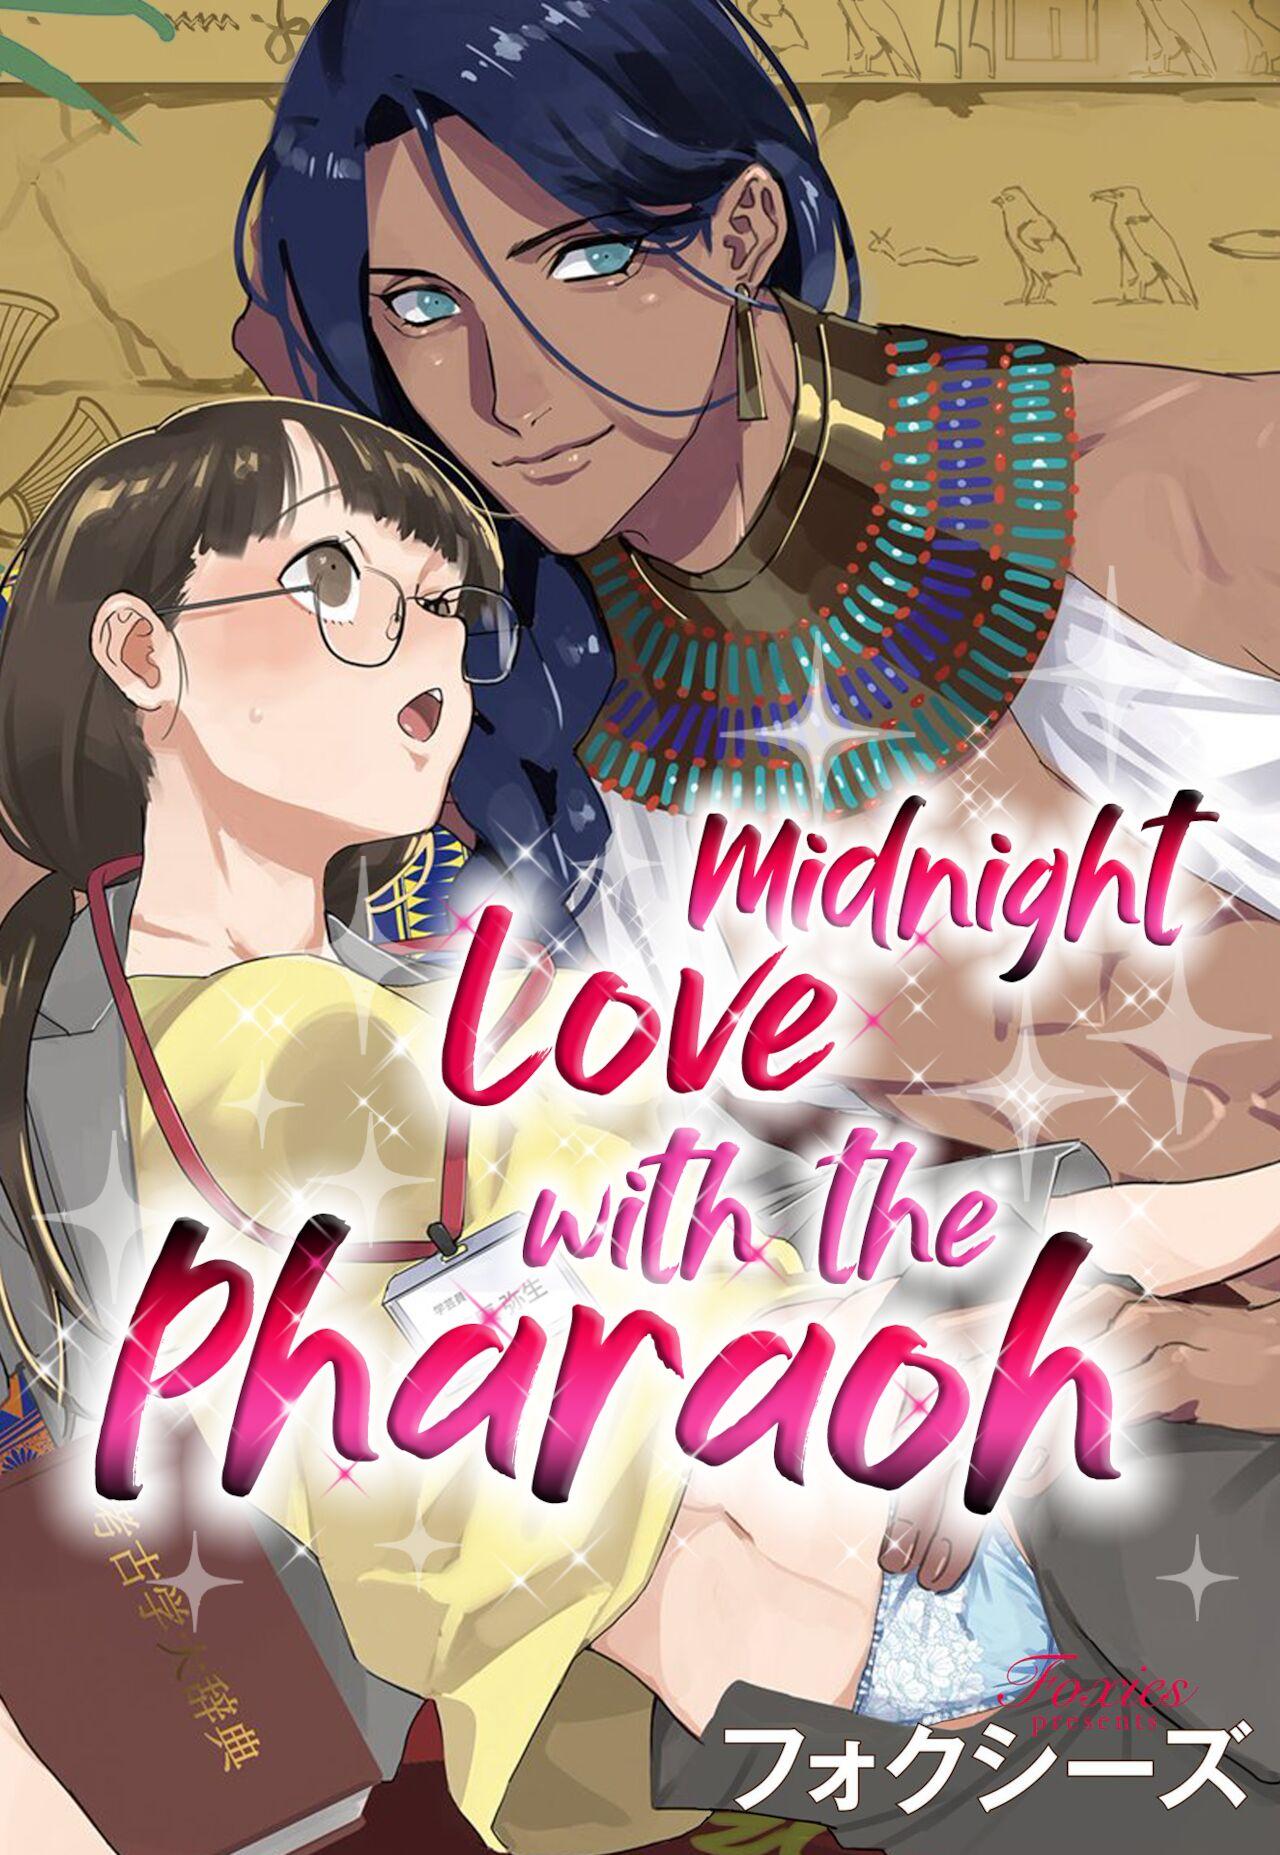 Pharaoh Midnight Love 2